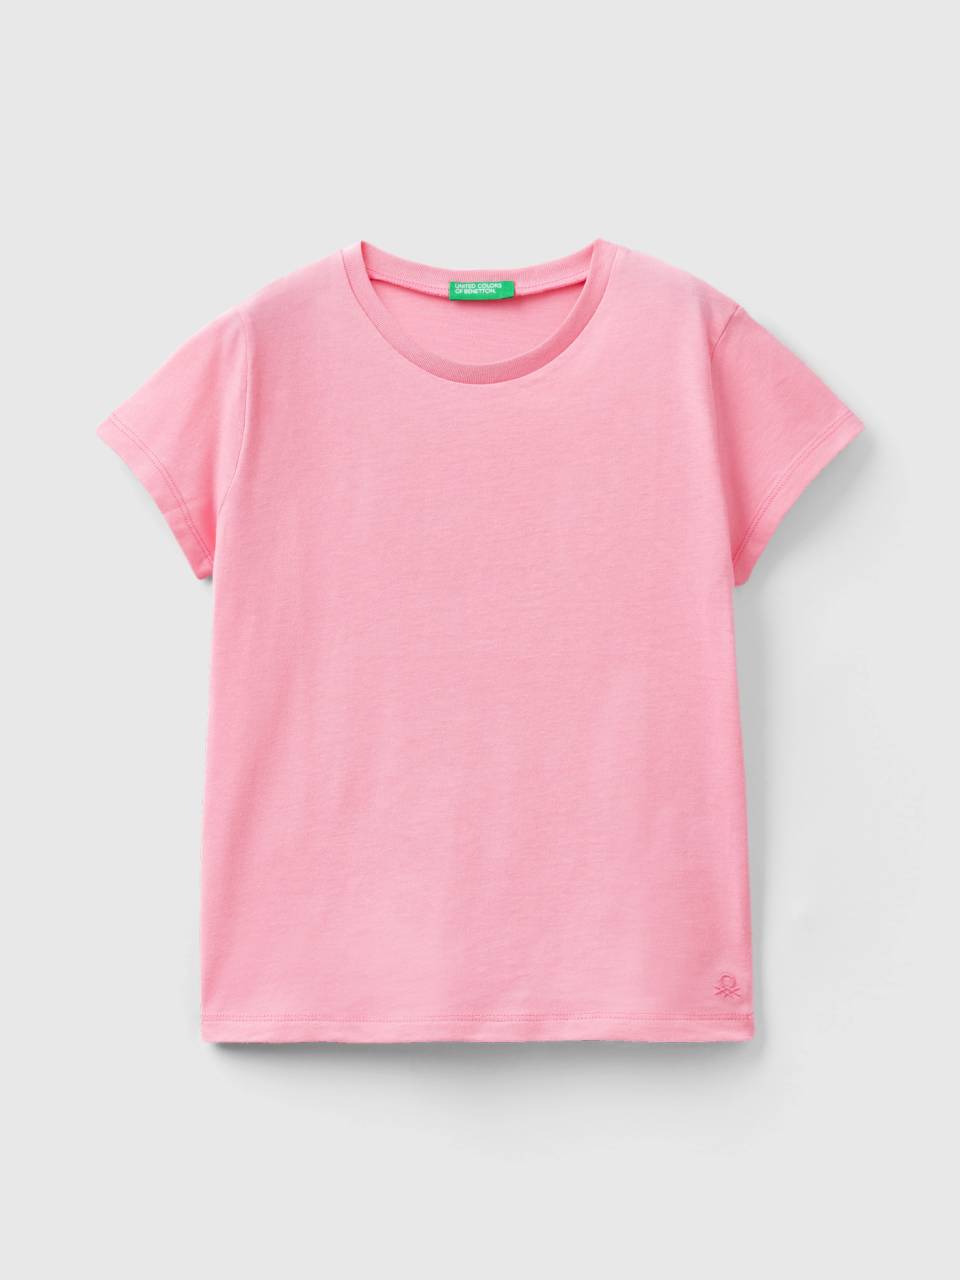 T-shirt in pure Pink cotton | Benetton - organic